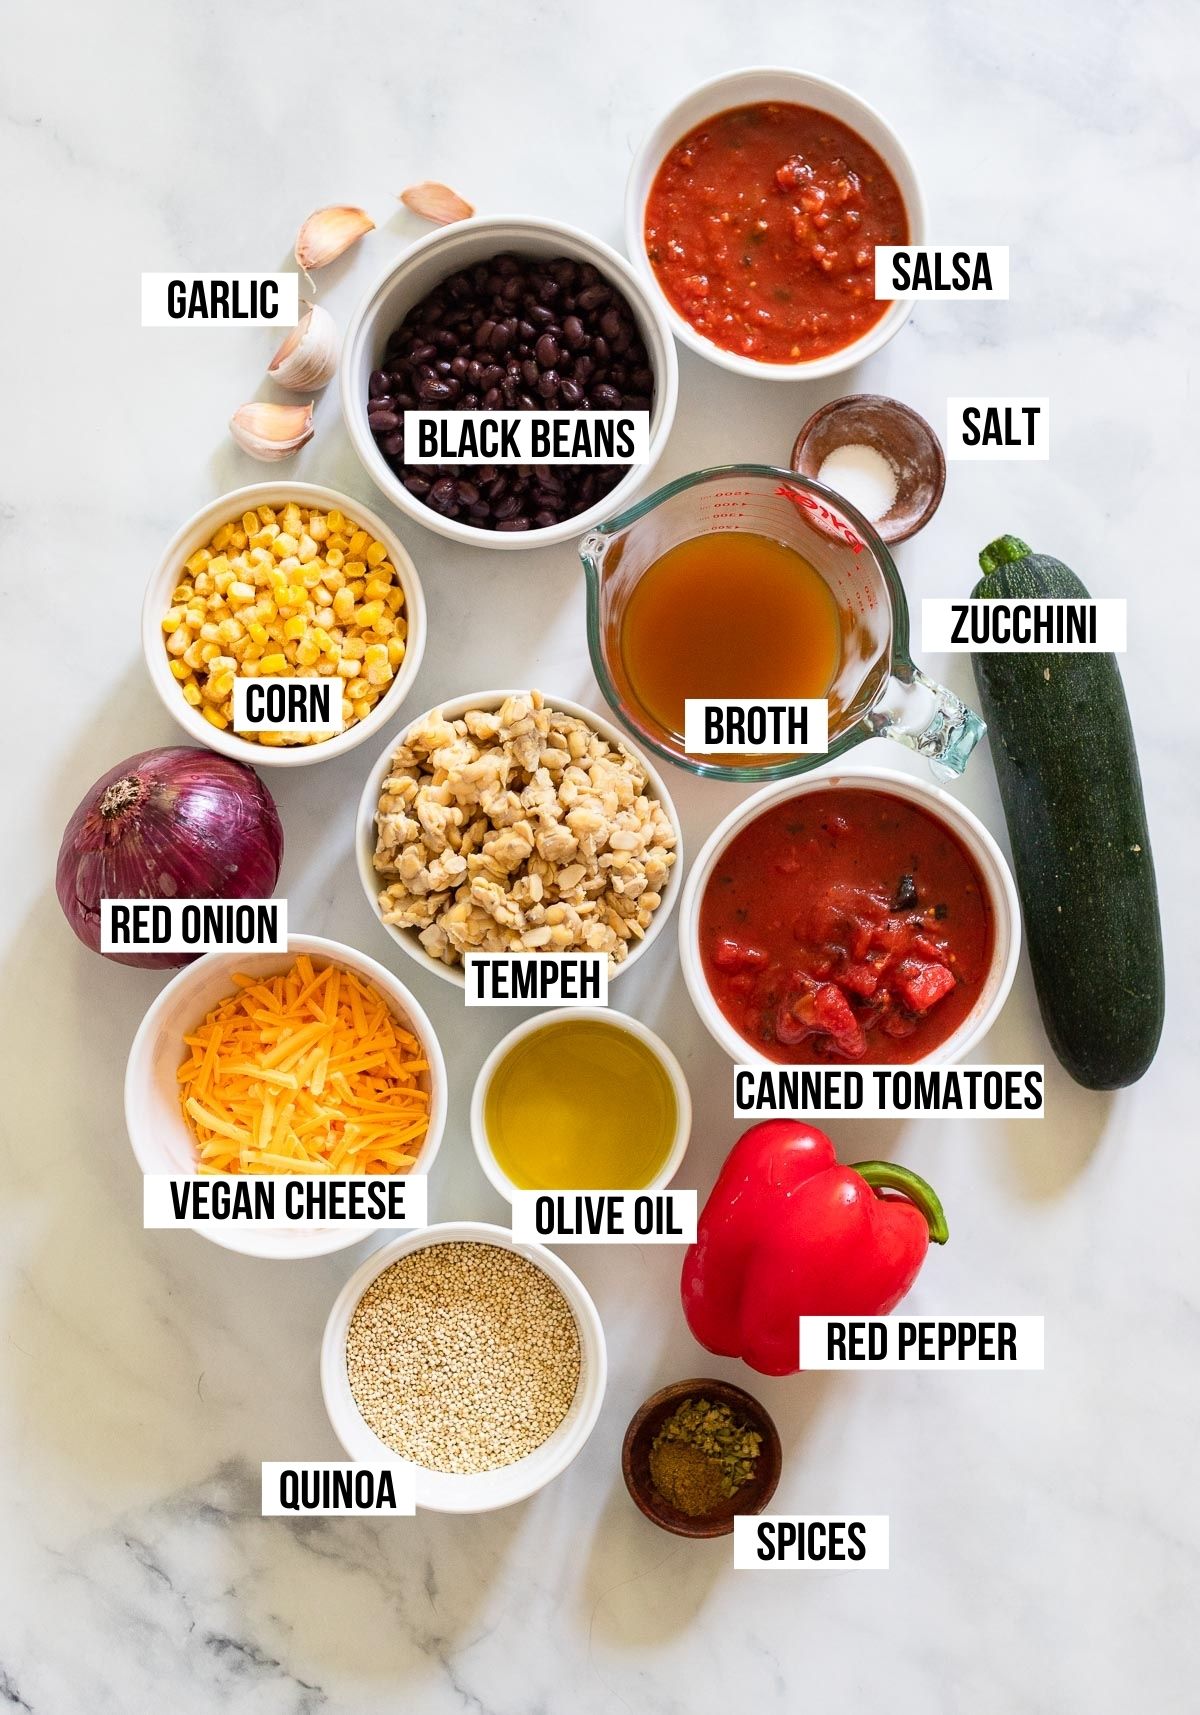 vegan taco skillet ingredients with labels.